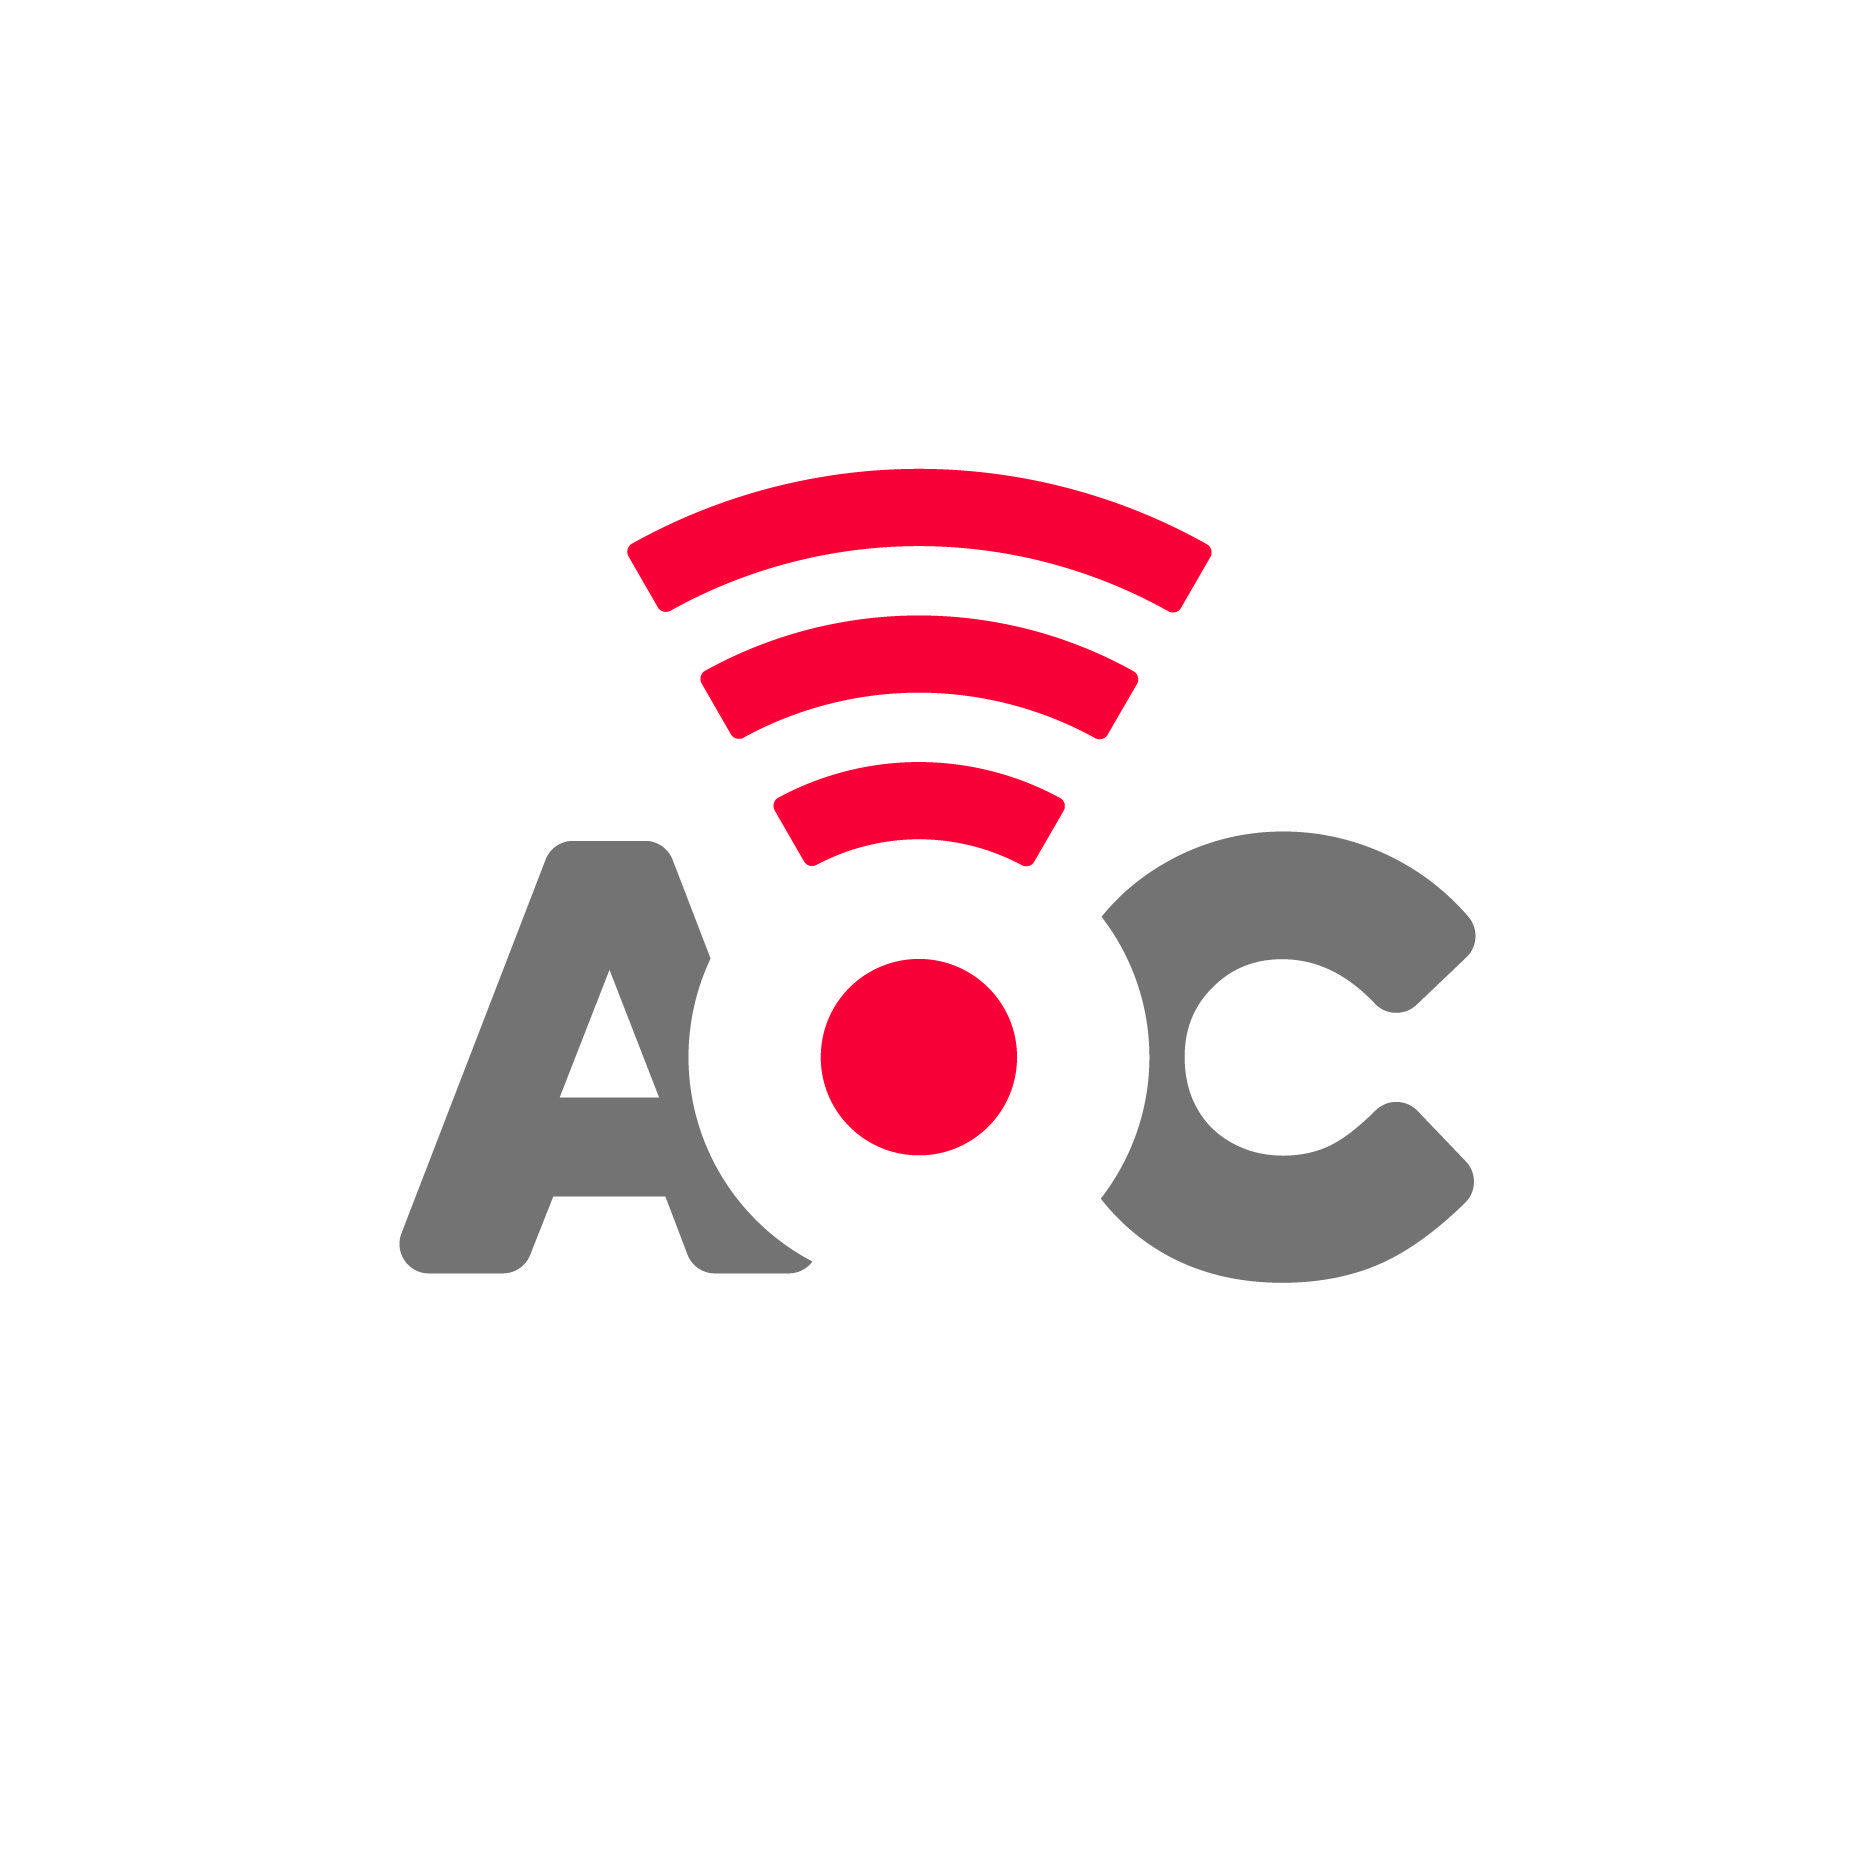 AOC Logo - AOC Logo Angle rightangleadv.com. My Work